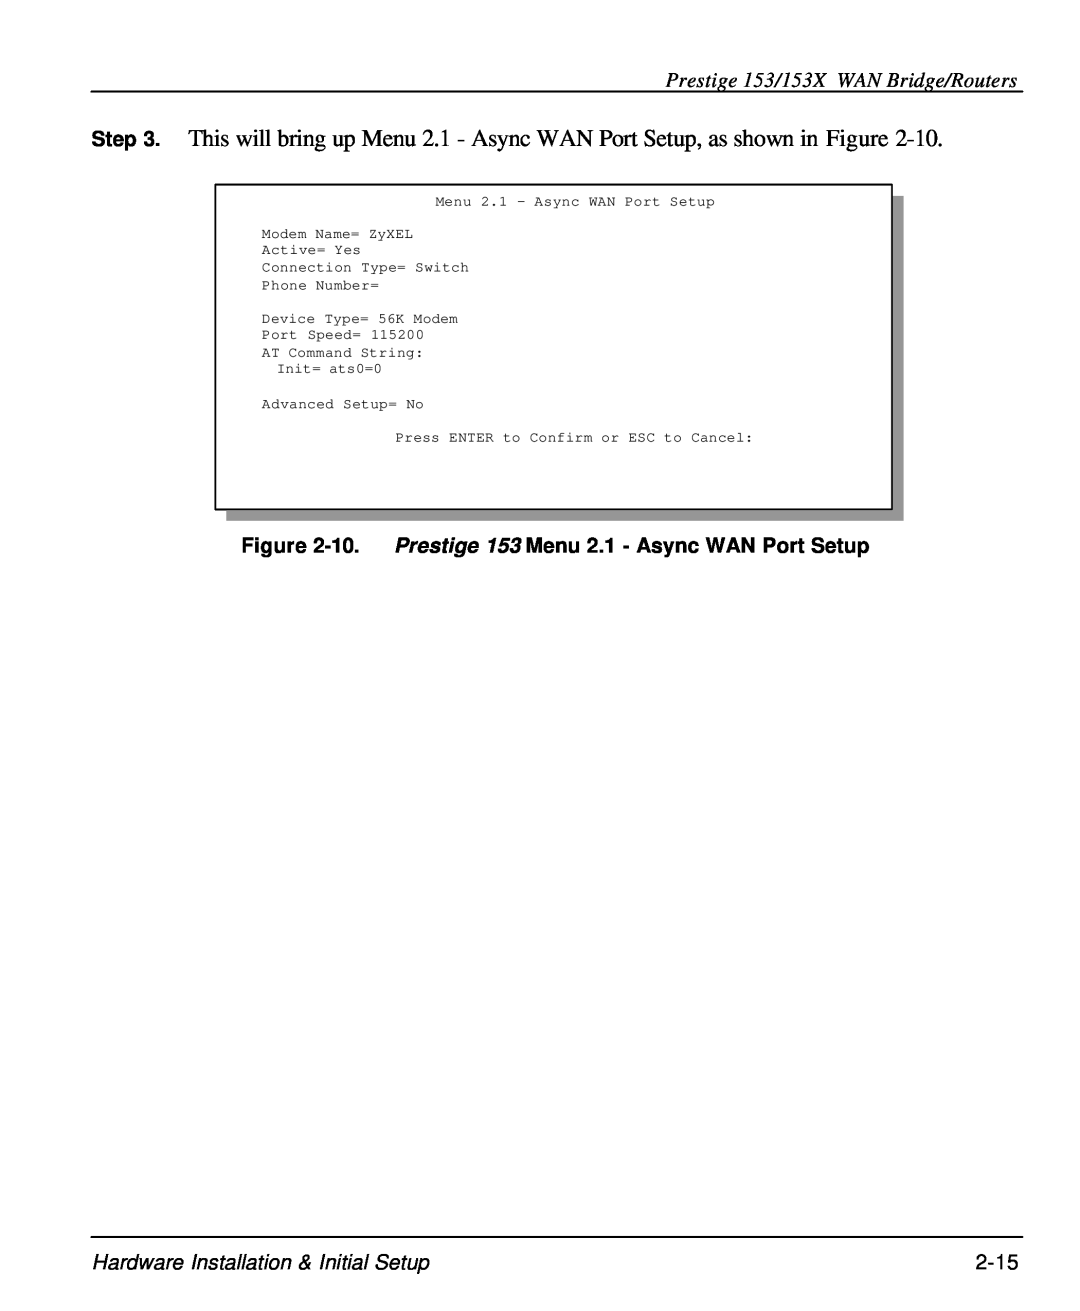 ZyXEL Communications user manual Prestige 153/153X WAN Bridge/Routers, 10. Prestige 153 Menu 2.1 - Async WAN Port Setup 